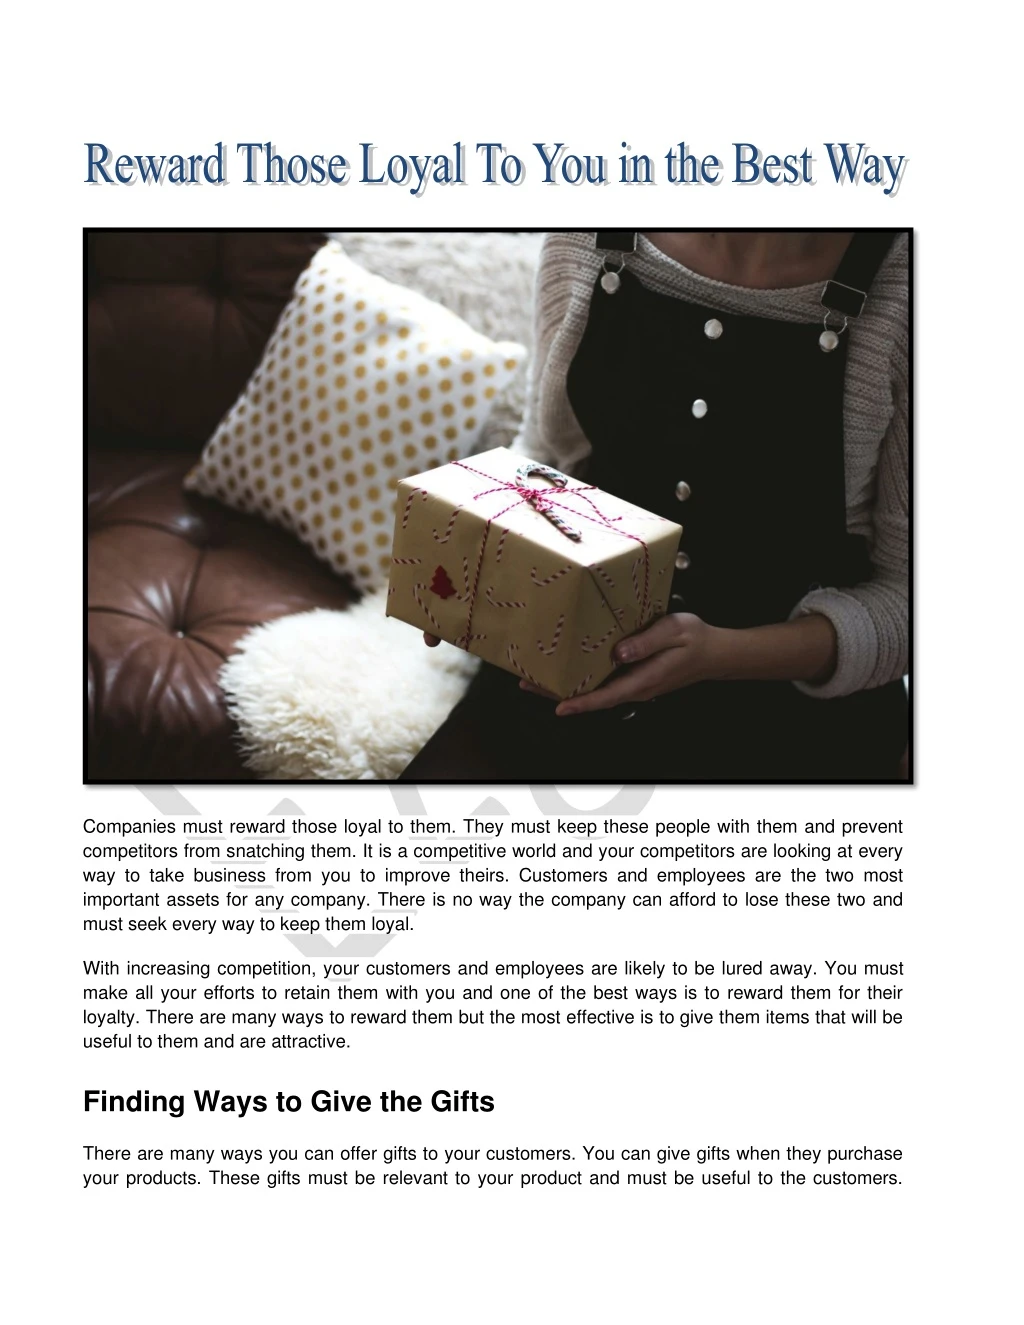 companies must reward those loyal to them they